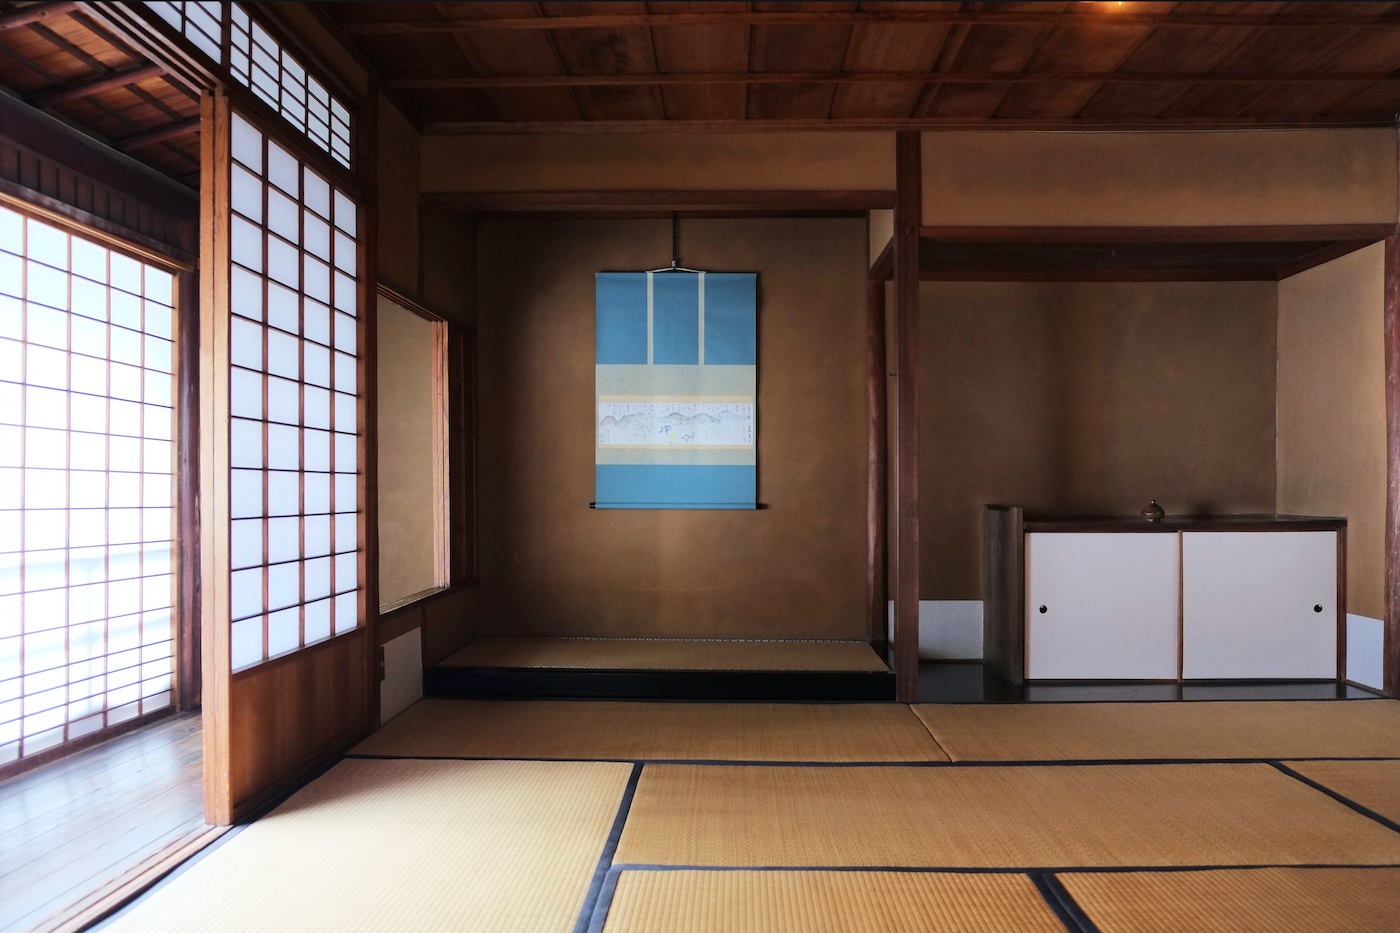 raditional Japanese dwelling fully equipped with tokonoma, tana, tsuke-shoin, tatami mats, and shoji screens